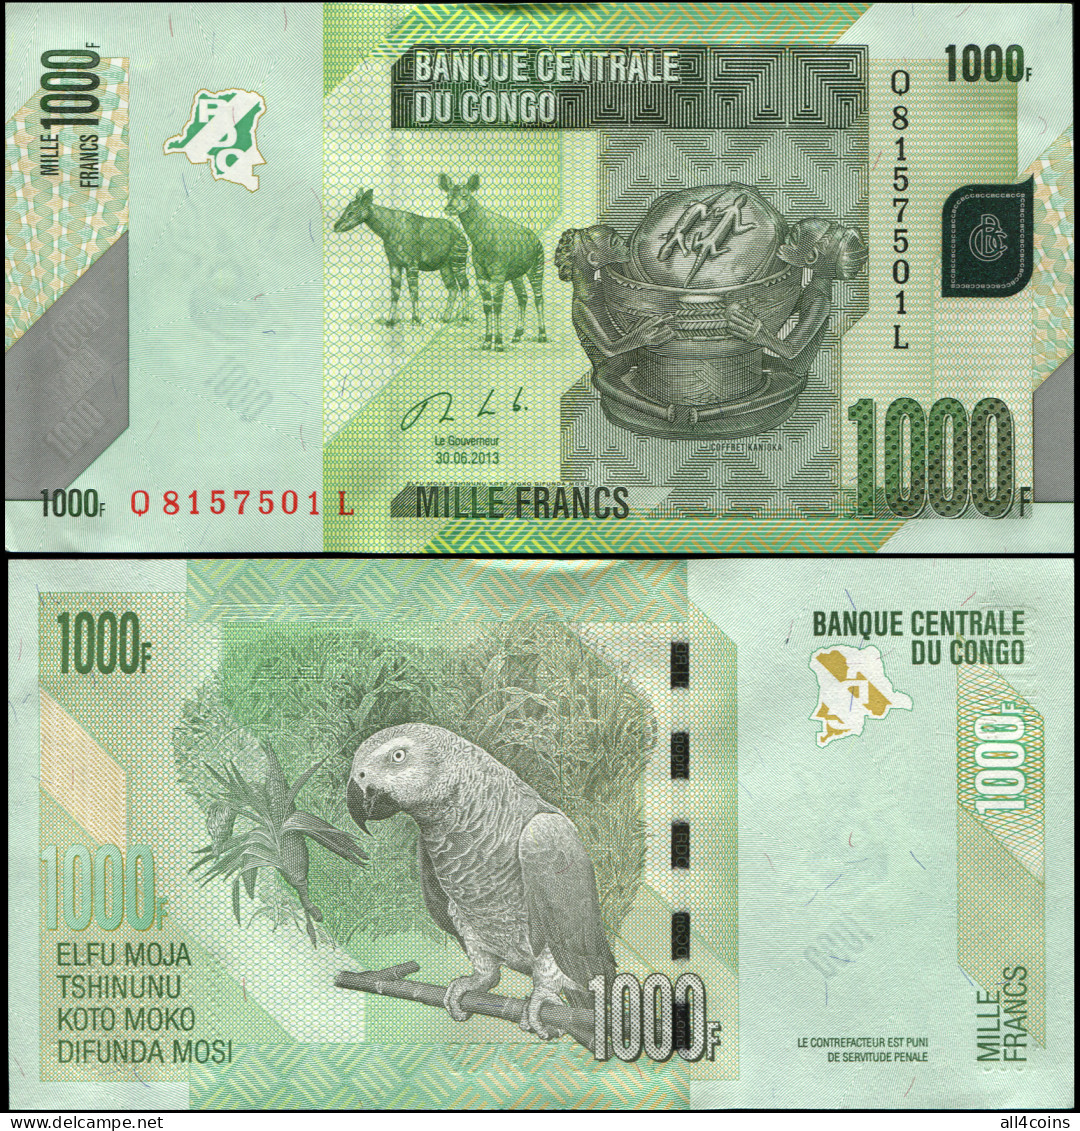 DR Congo 1000 Francs. 30.06.2013 Unc. Banknote Cat# P.101b - Democratic Republic Of The Congo & Zaire